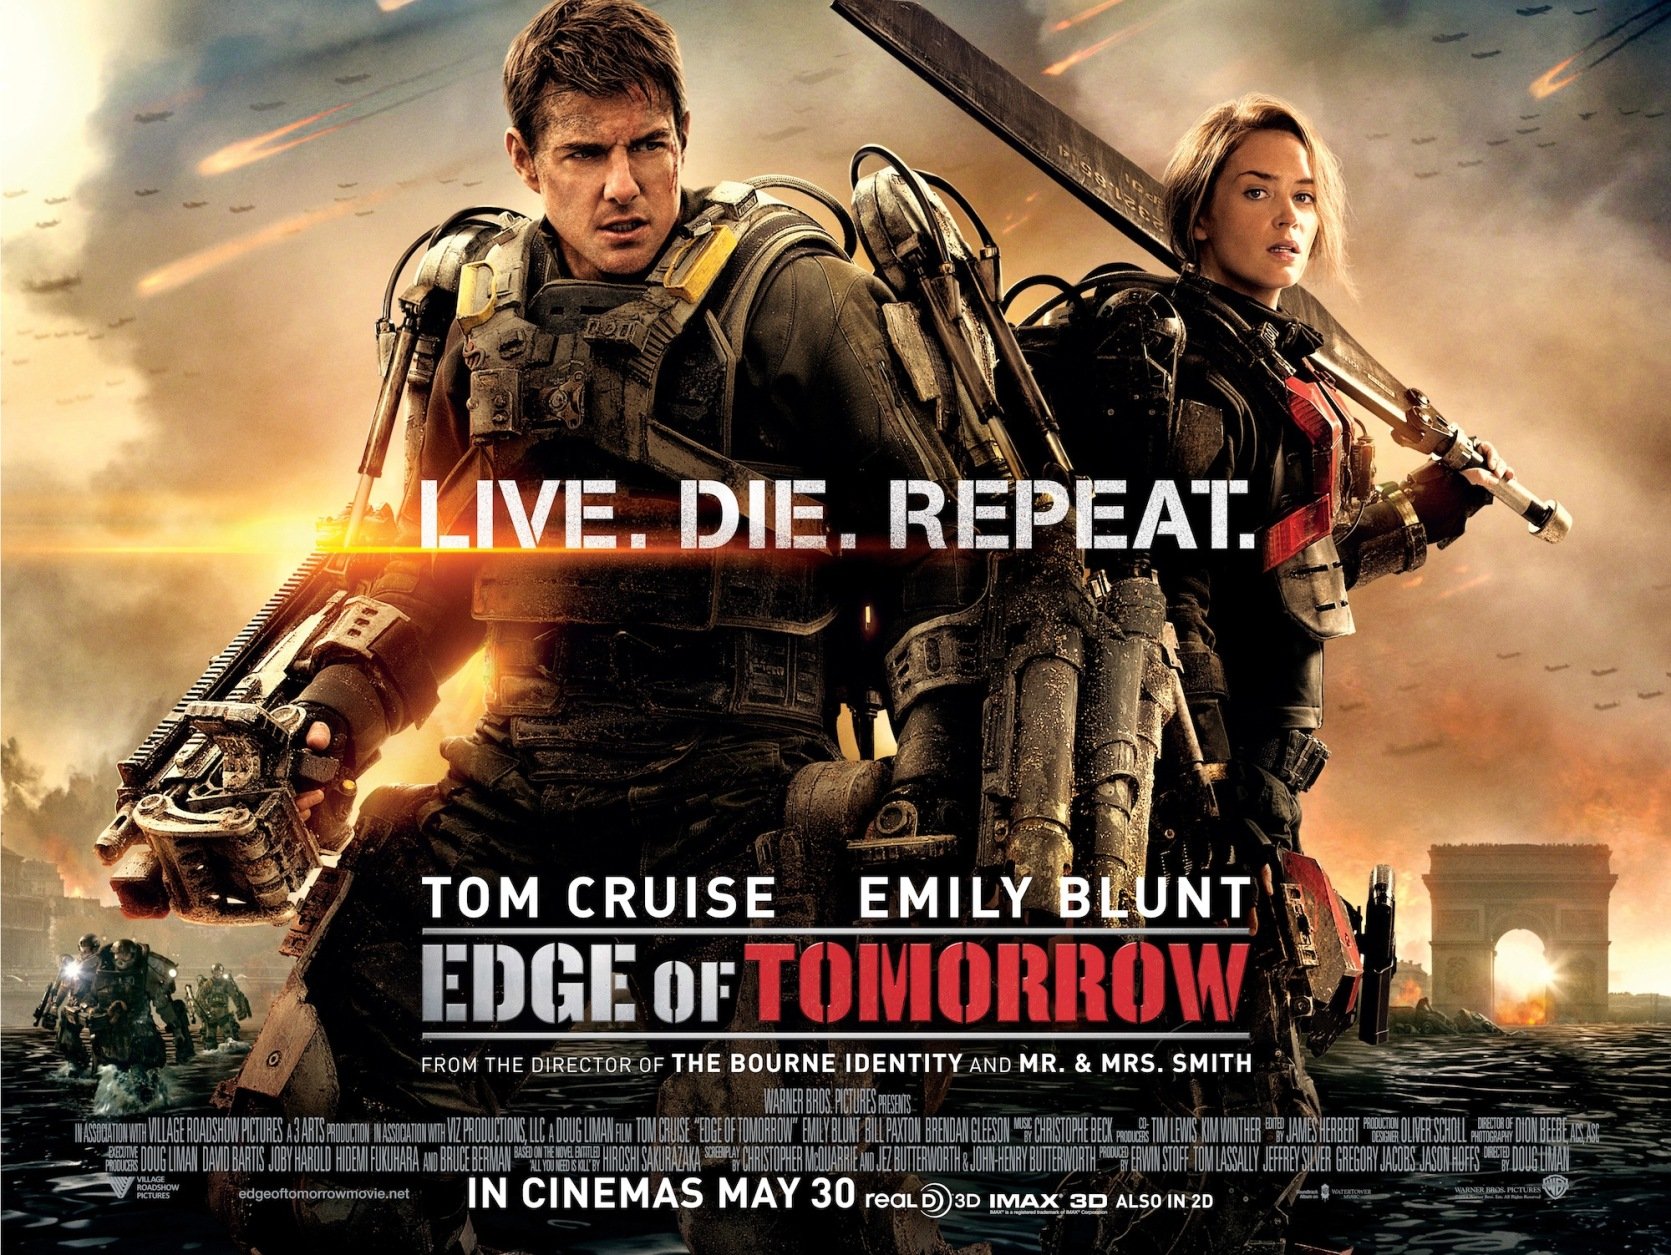 edge, Of, Tomorrow, Action, Militar, Ysci fi, Thriller, Warrior, Futuristic, Science, Fiction, Technics, Cruise Wallpaper